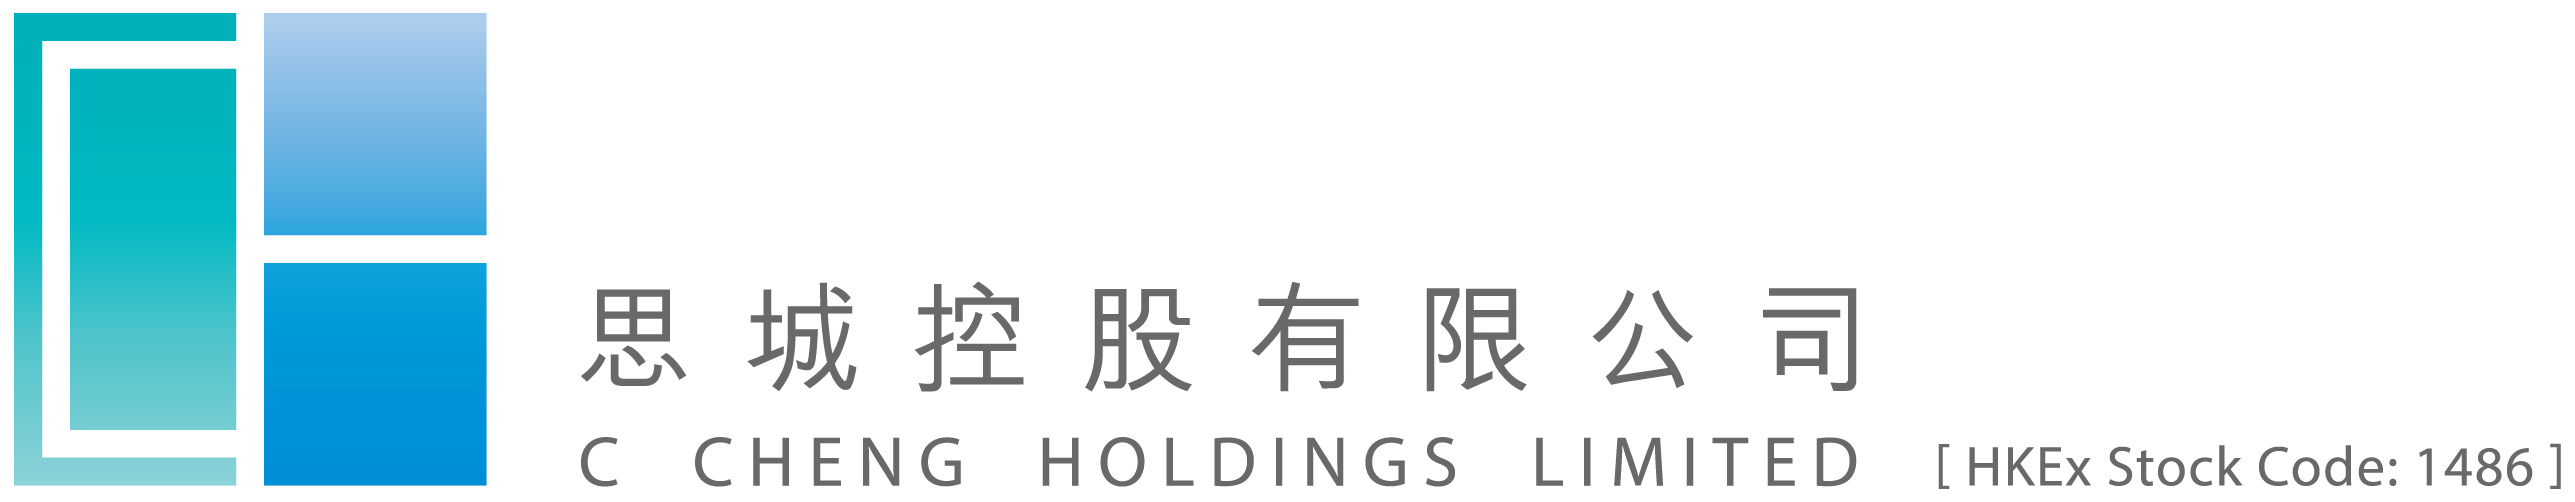 C Cheng Holdings